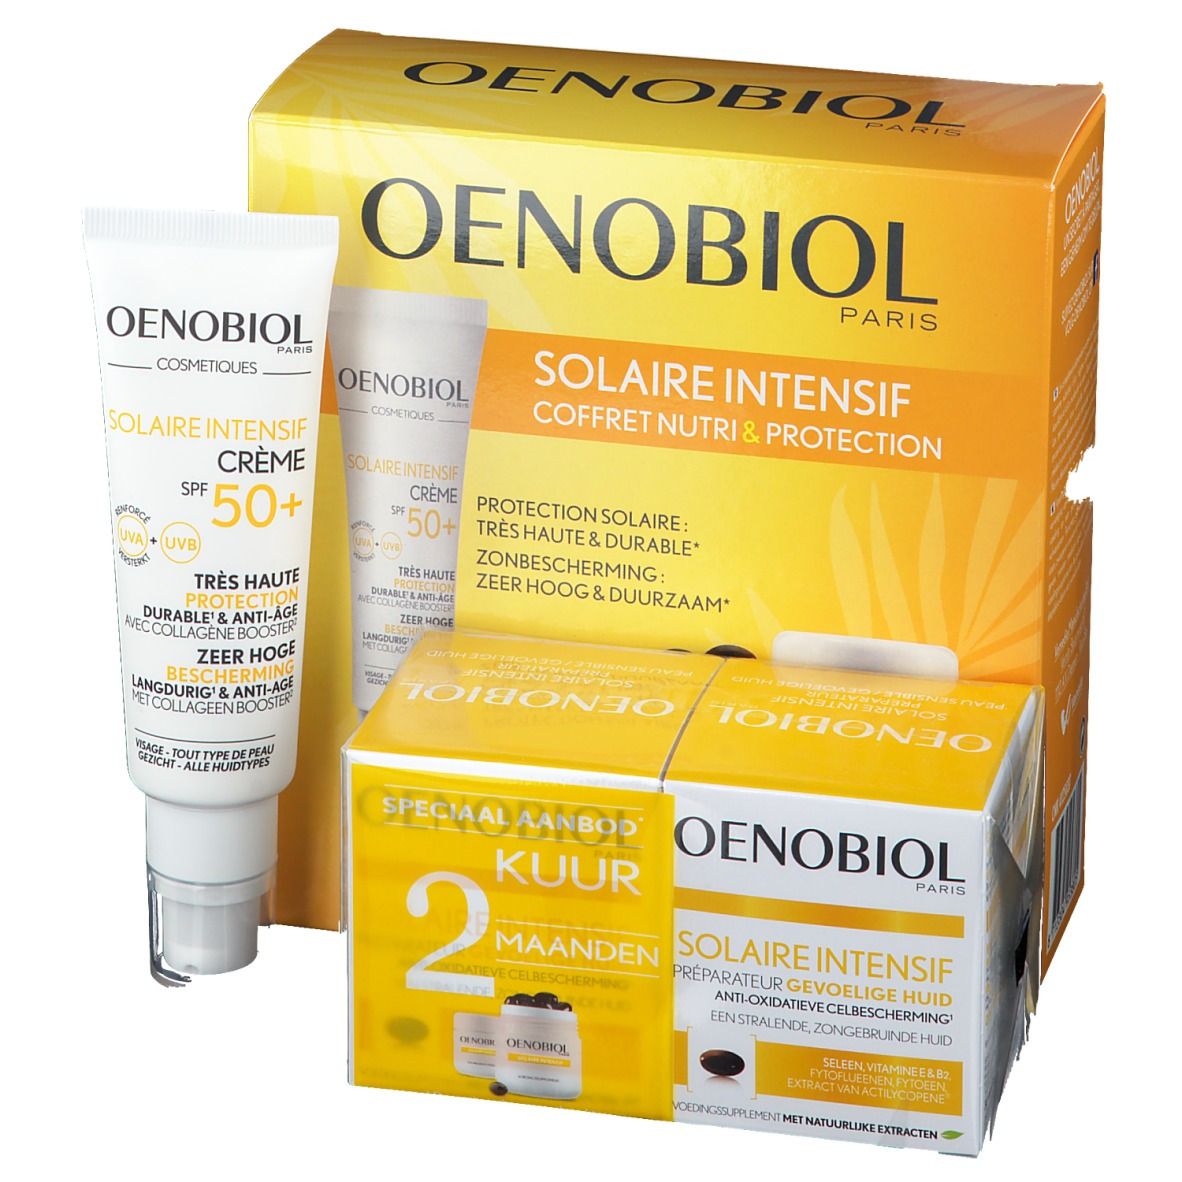 Oenobiol Solaire Intensif Nutri & Protection - Celbescherming van Binnenuit Gift Set